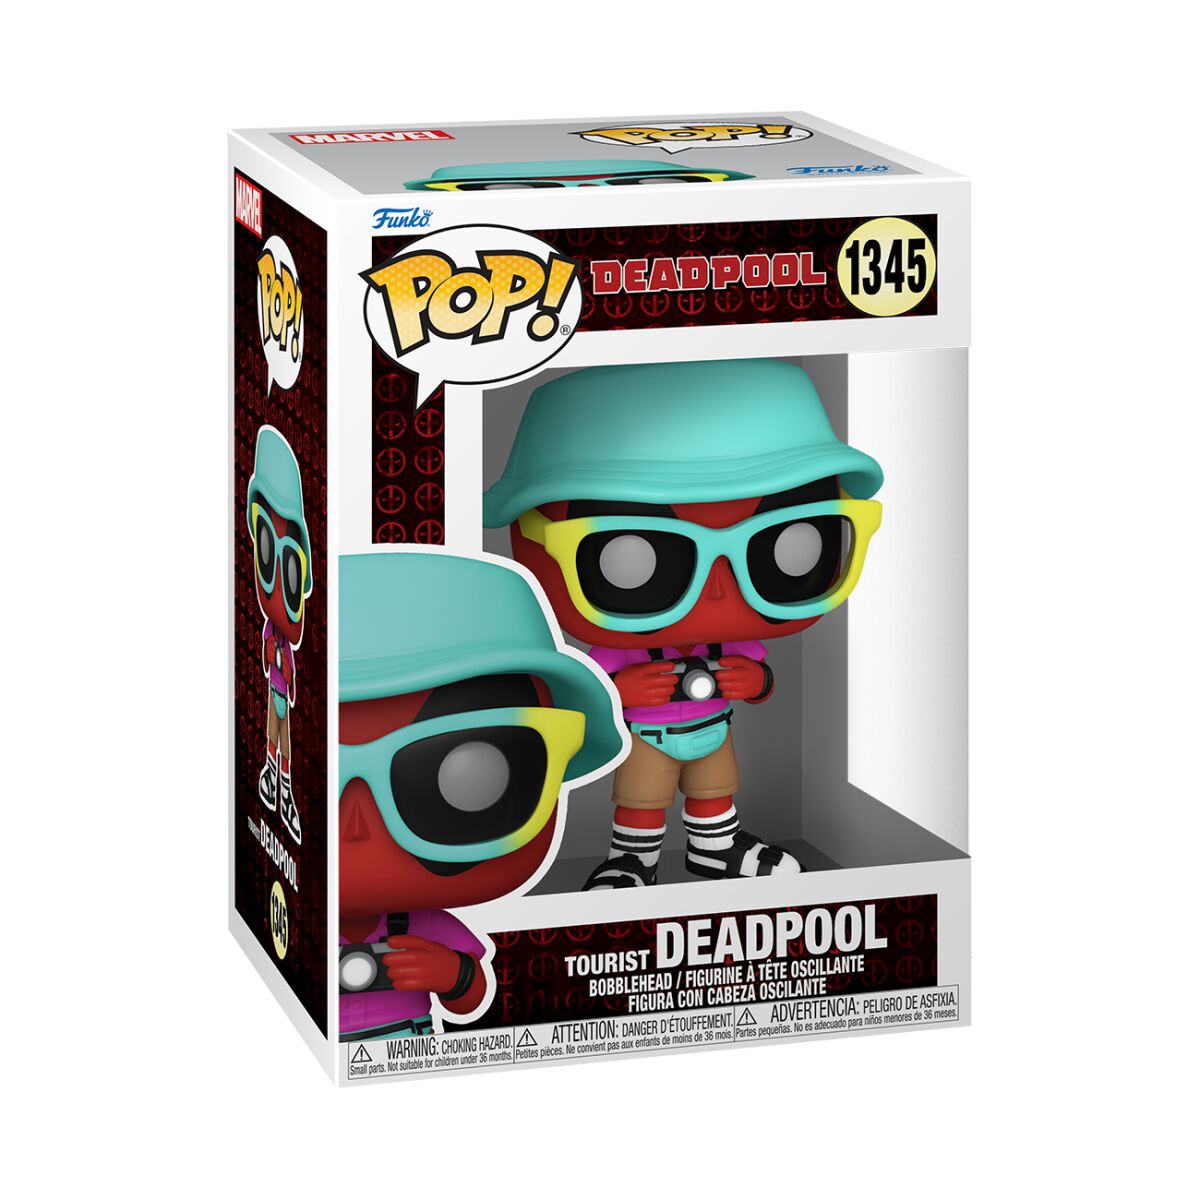 Deadpool Tourist Deadpool Vinyl Figur 1345 Funko Pop! multicolor von Deadpool